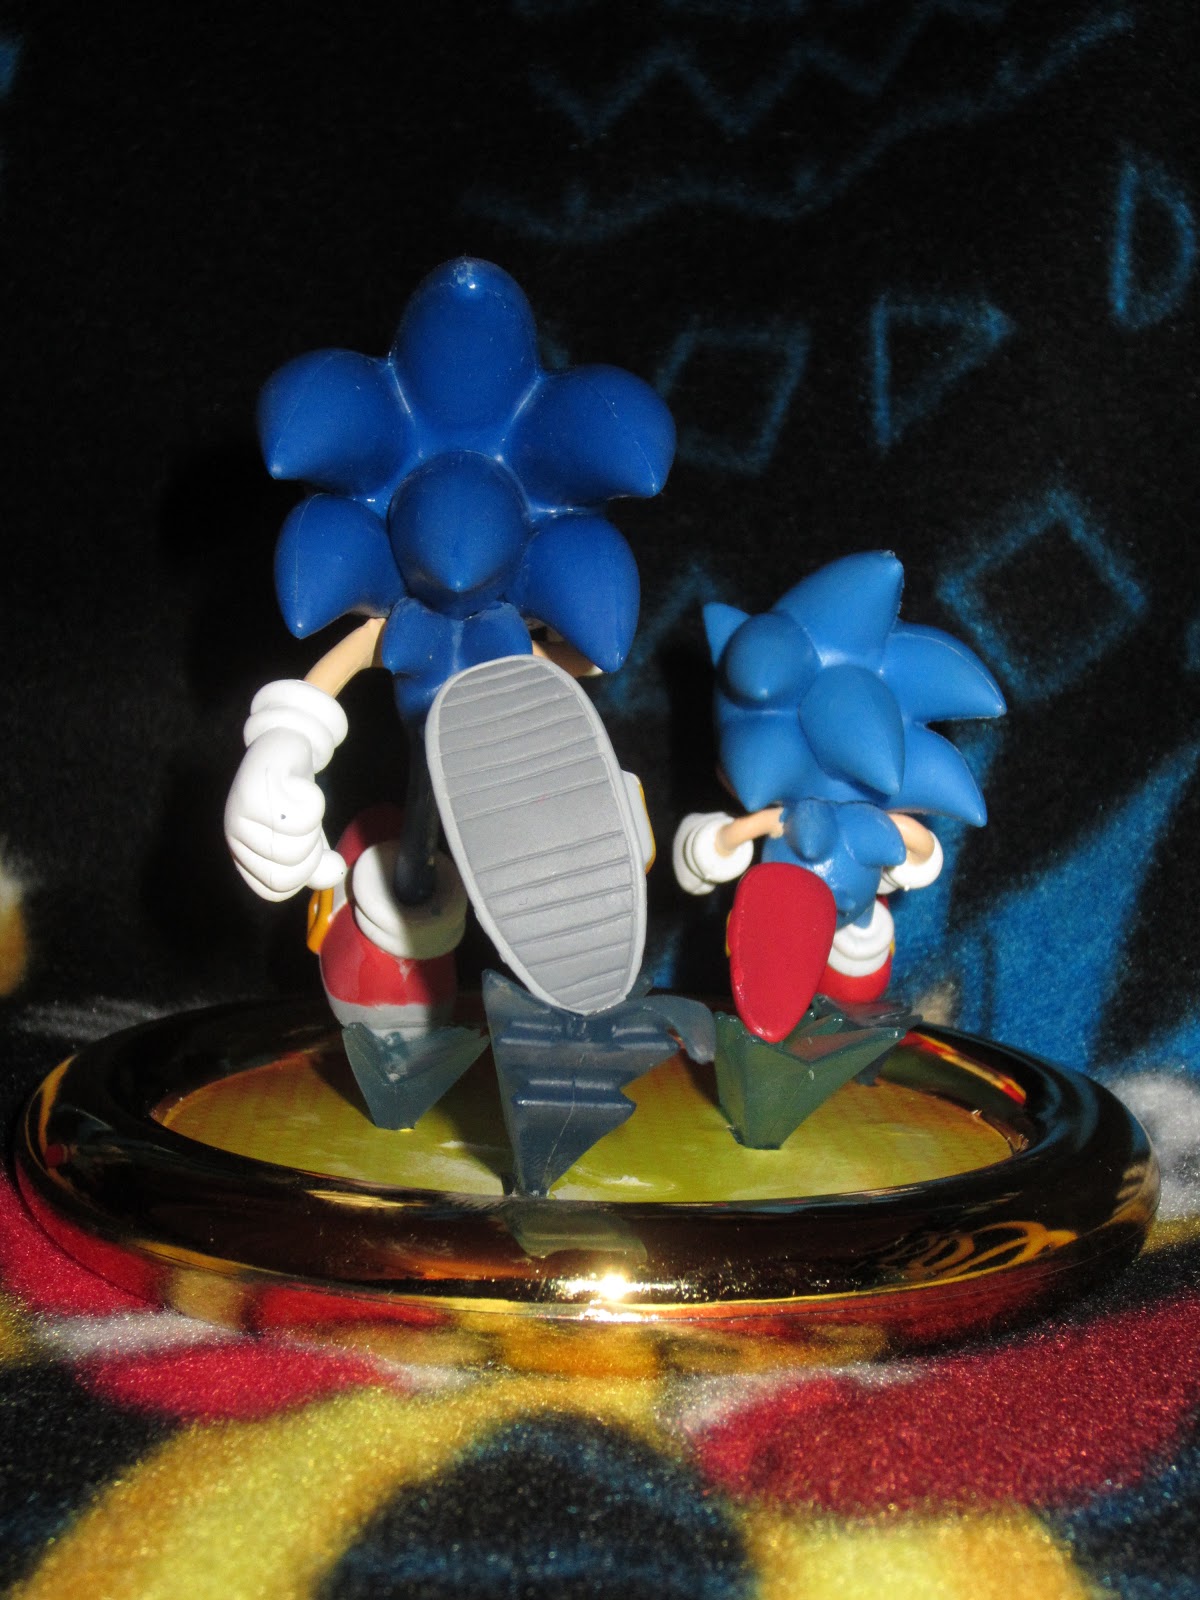 Jazwares Sonic The Hedgehog Generations Statue Action Figure for sale online